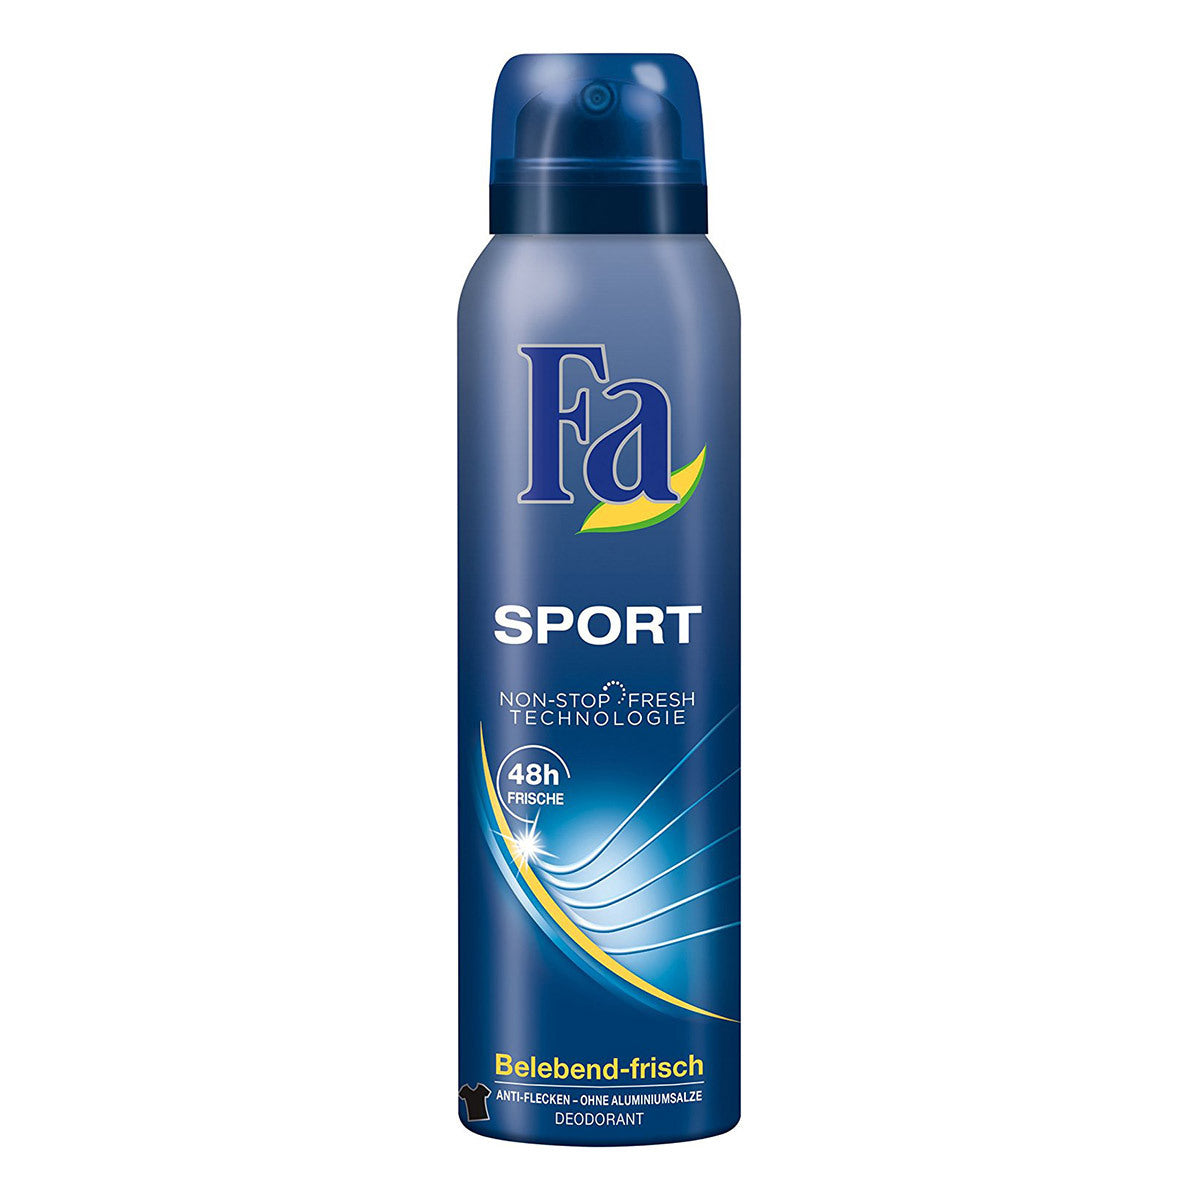 Alternate image of Sport Spray Deodorant